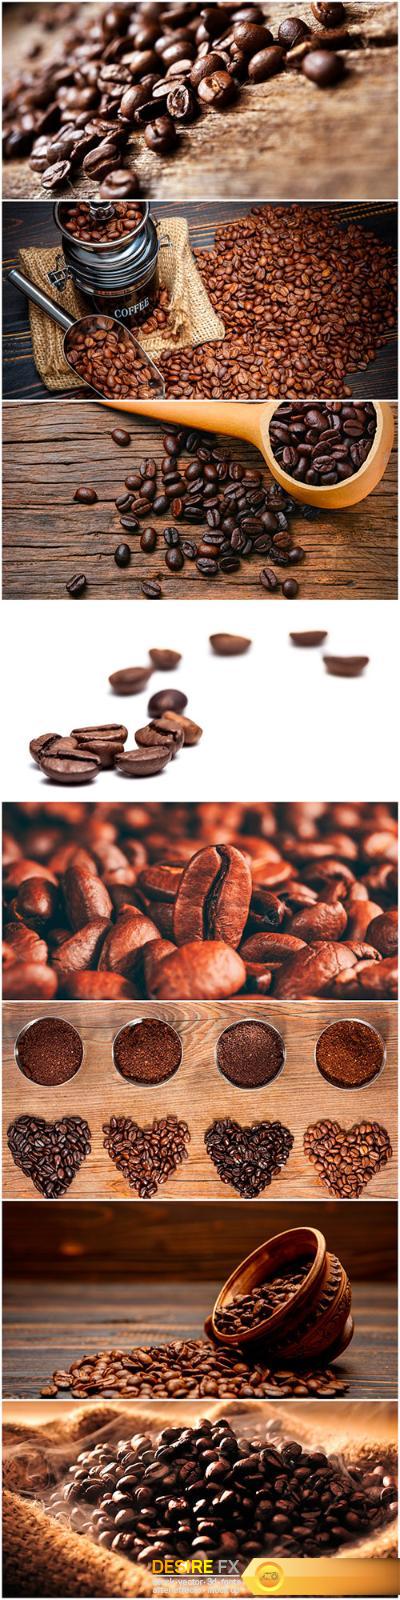 Coffee beans - 8UHQ JPEG